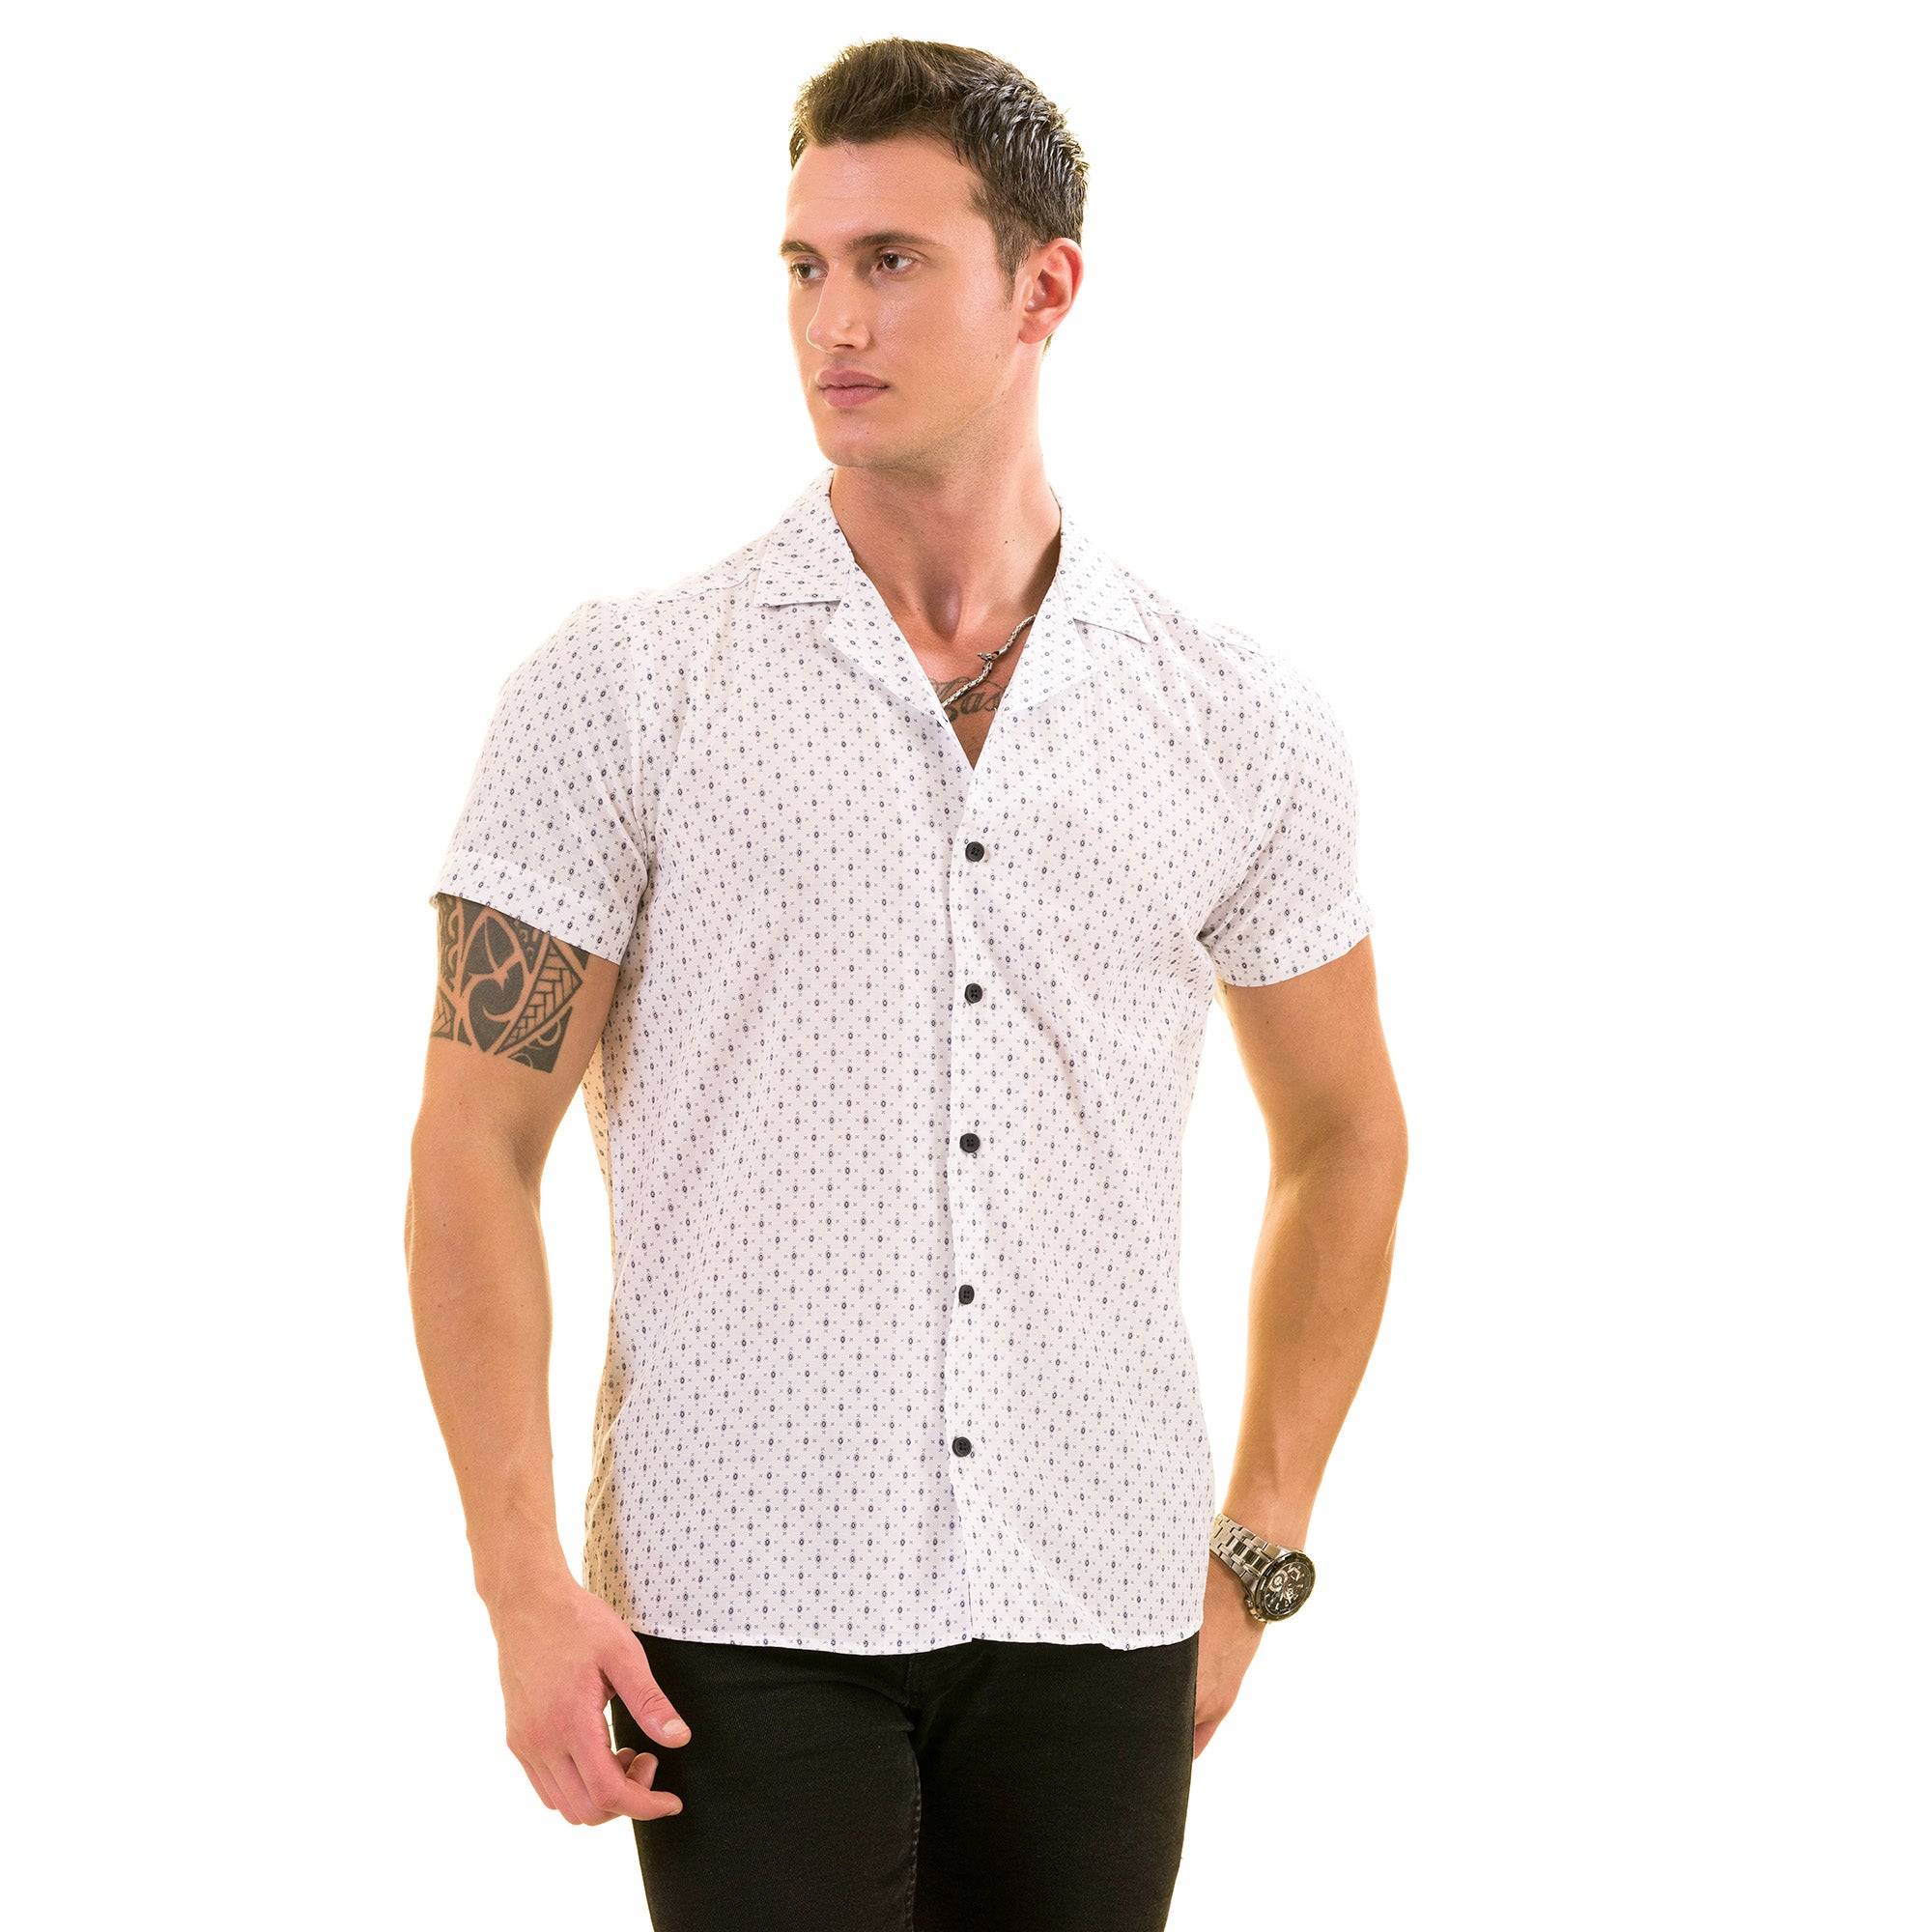 White Dotted European Made & Designed Hawaiian Summer Shirts For Men